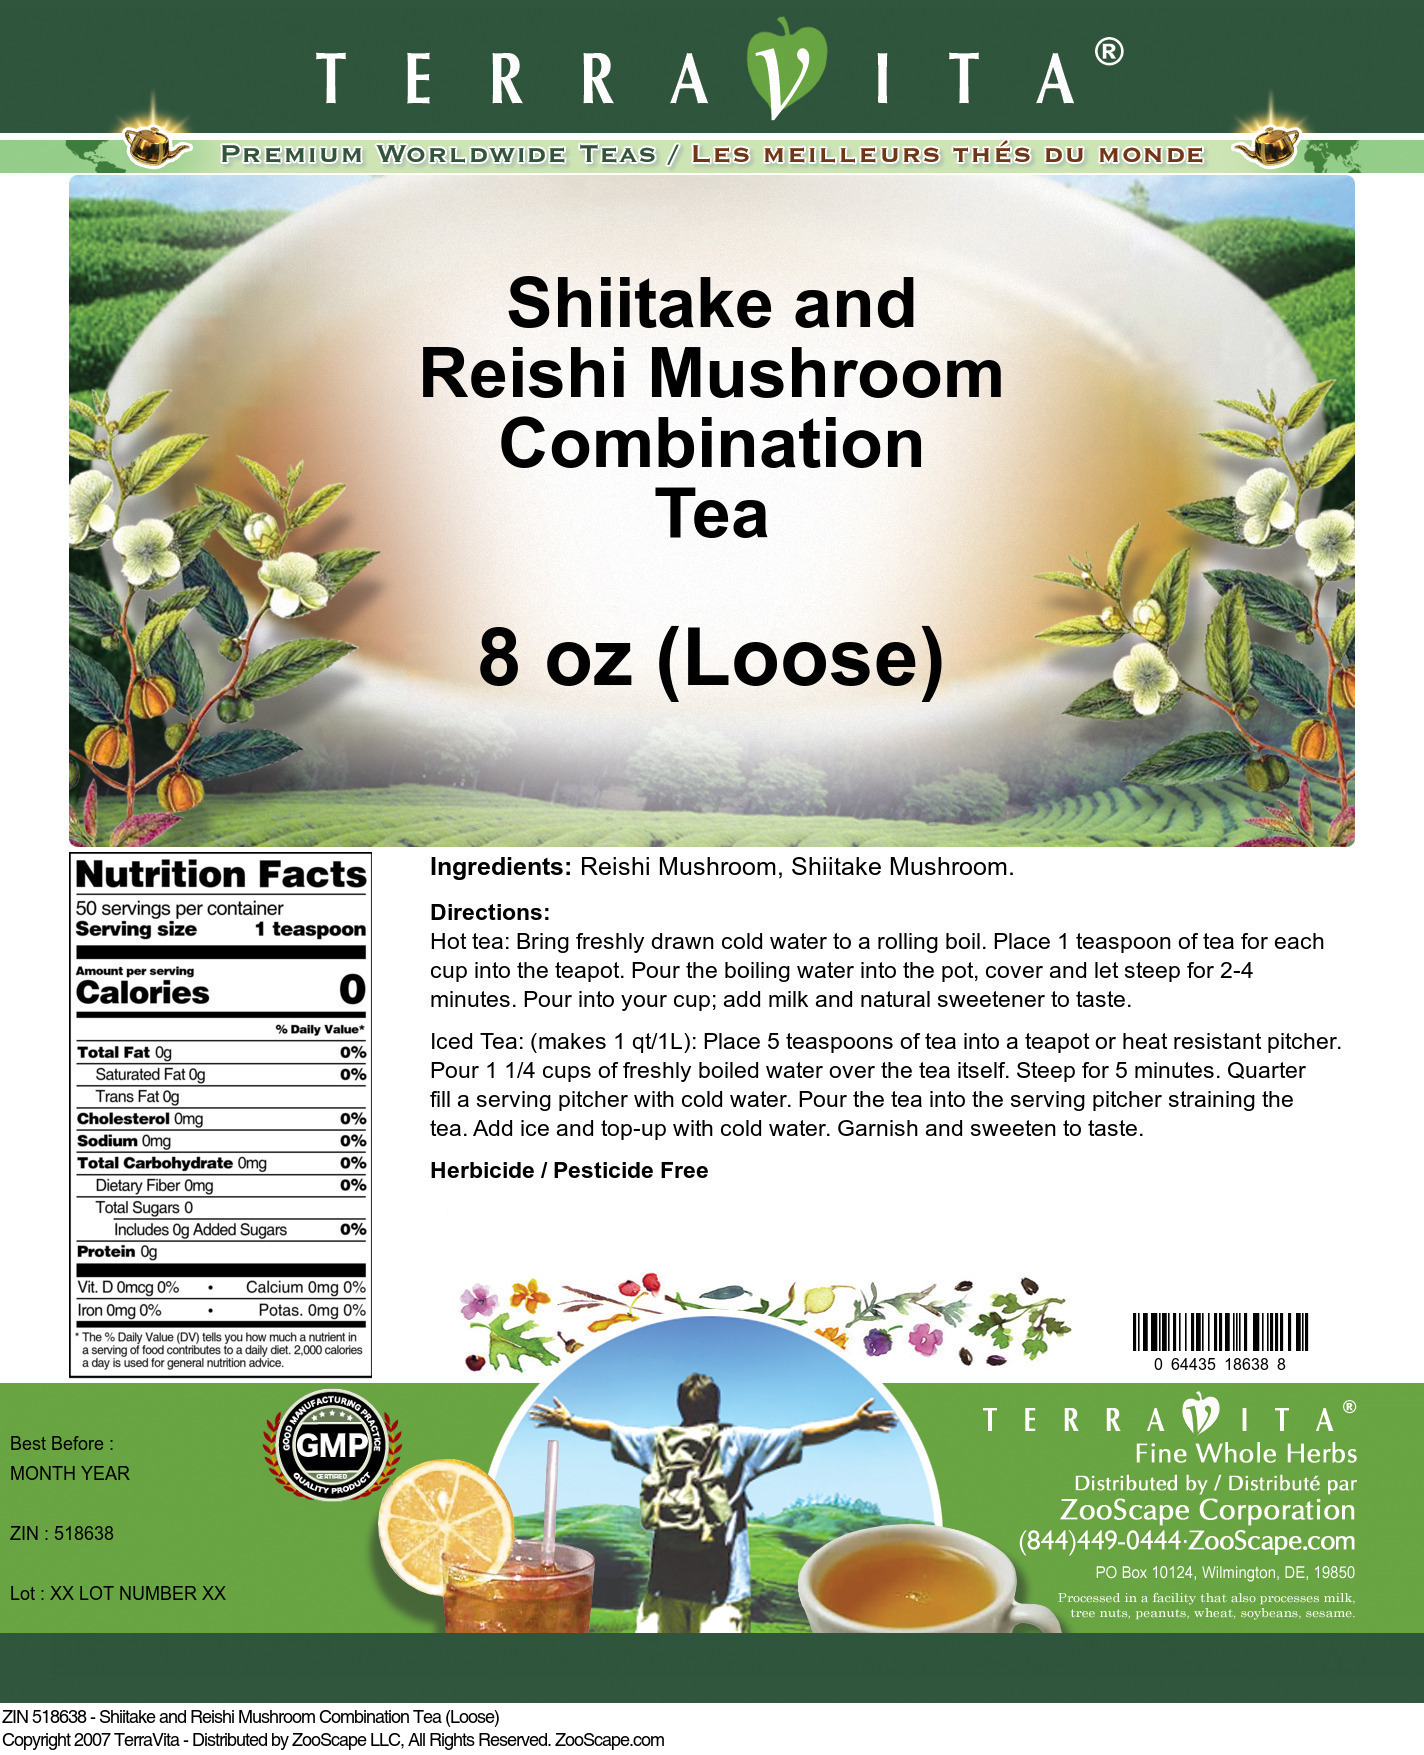 Shiitake and Reishi Mushroom Combination Tea (Loose) - Label